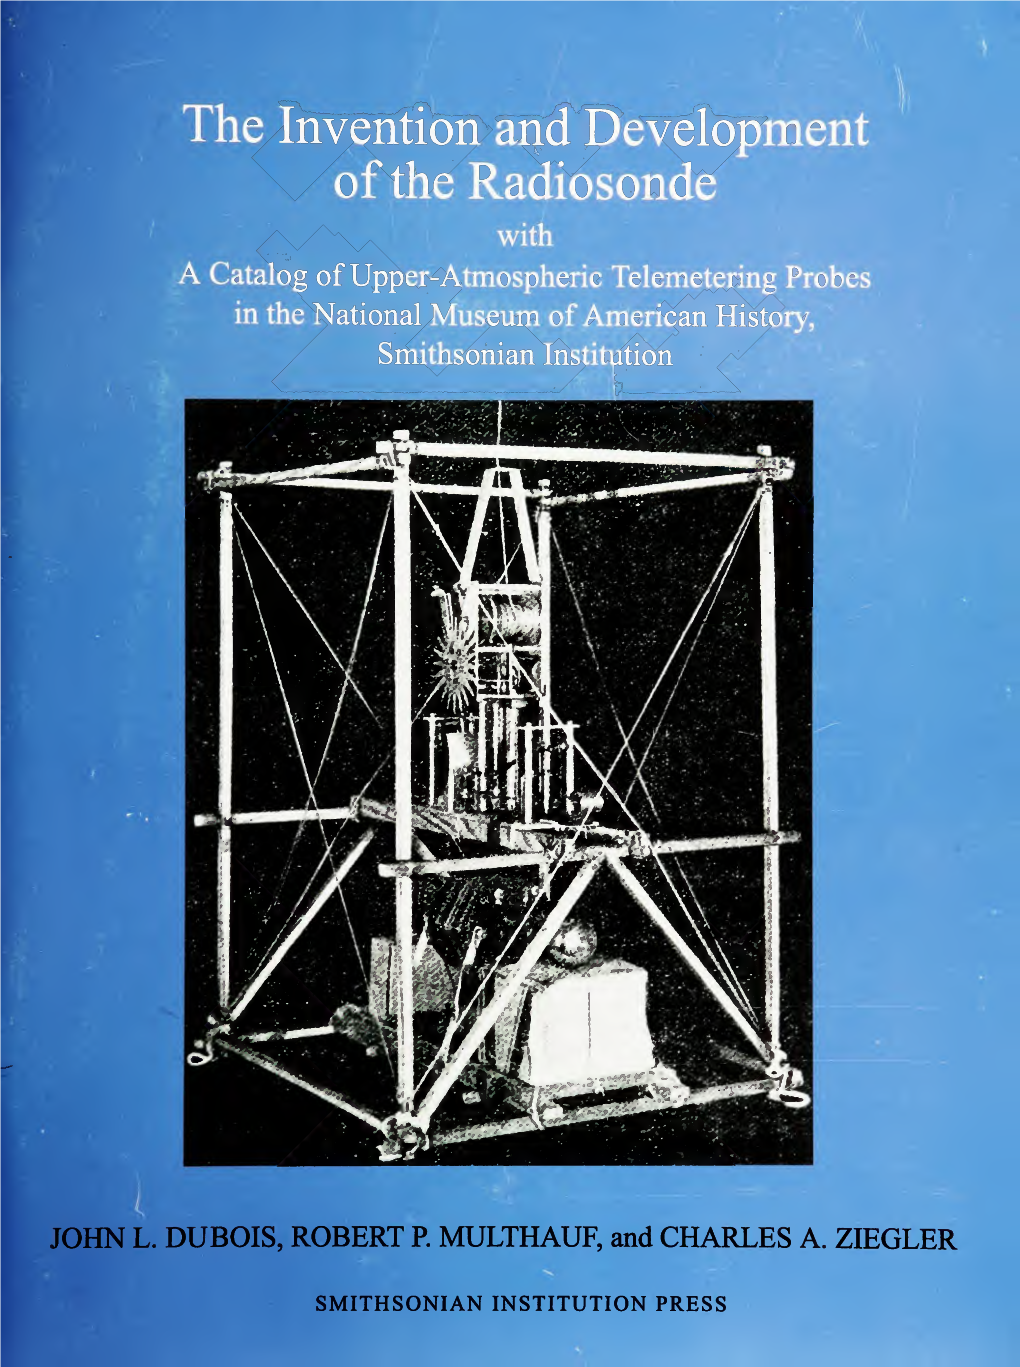 The Invention and Development of the Radiosonde